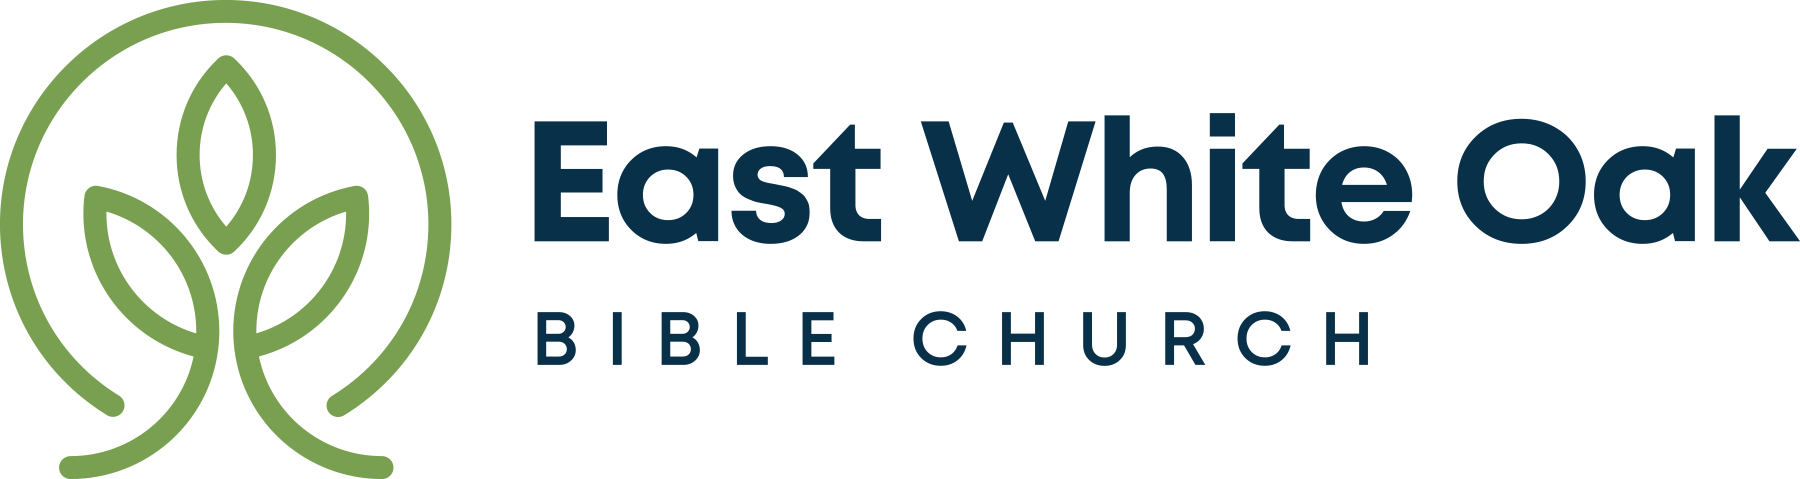 East White Oak Bible Church